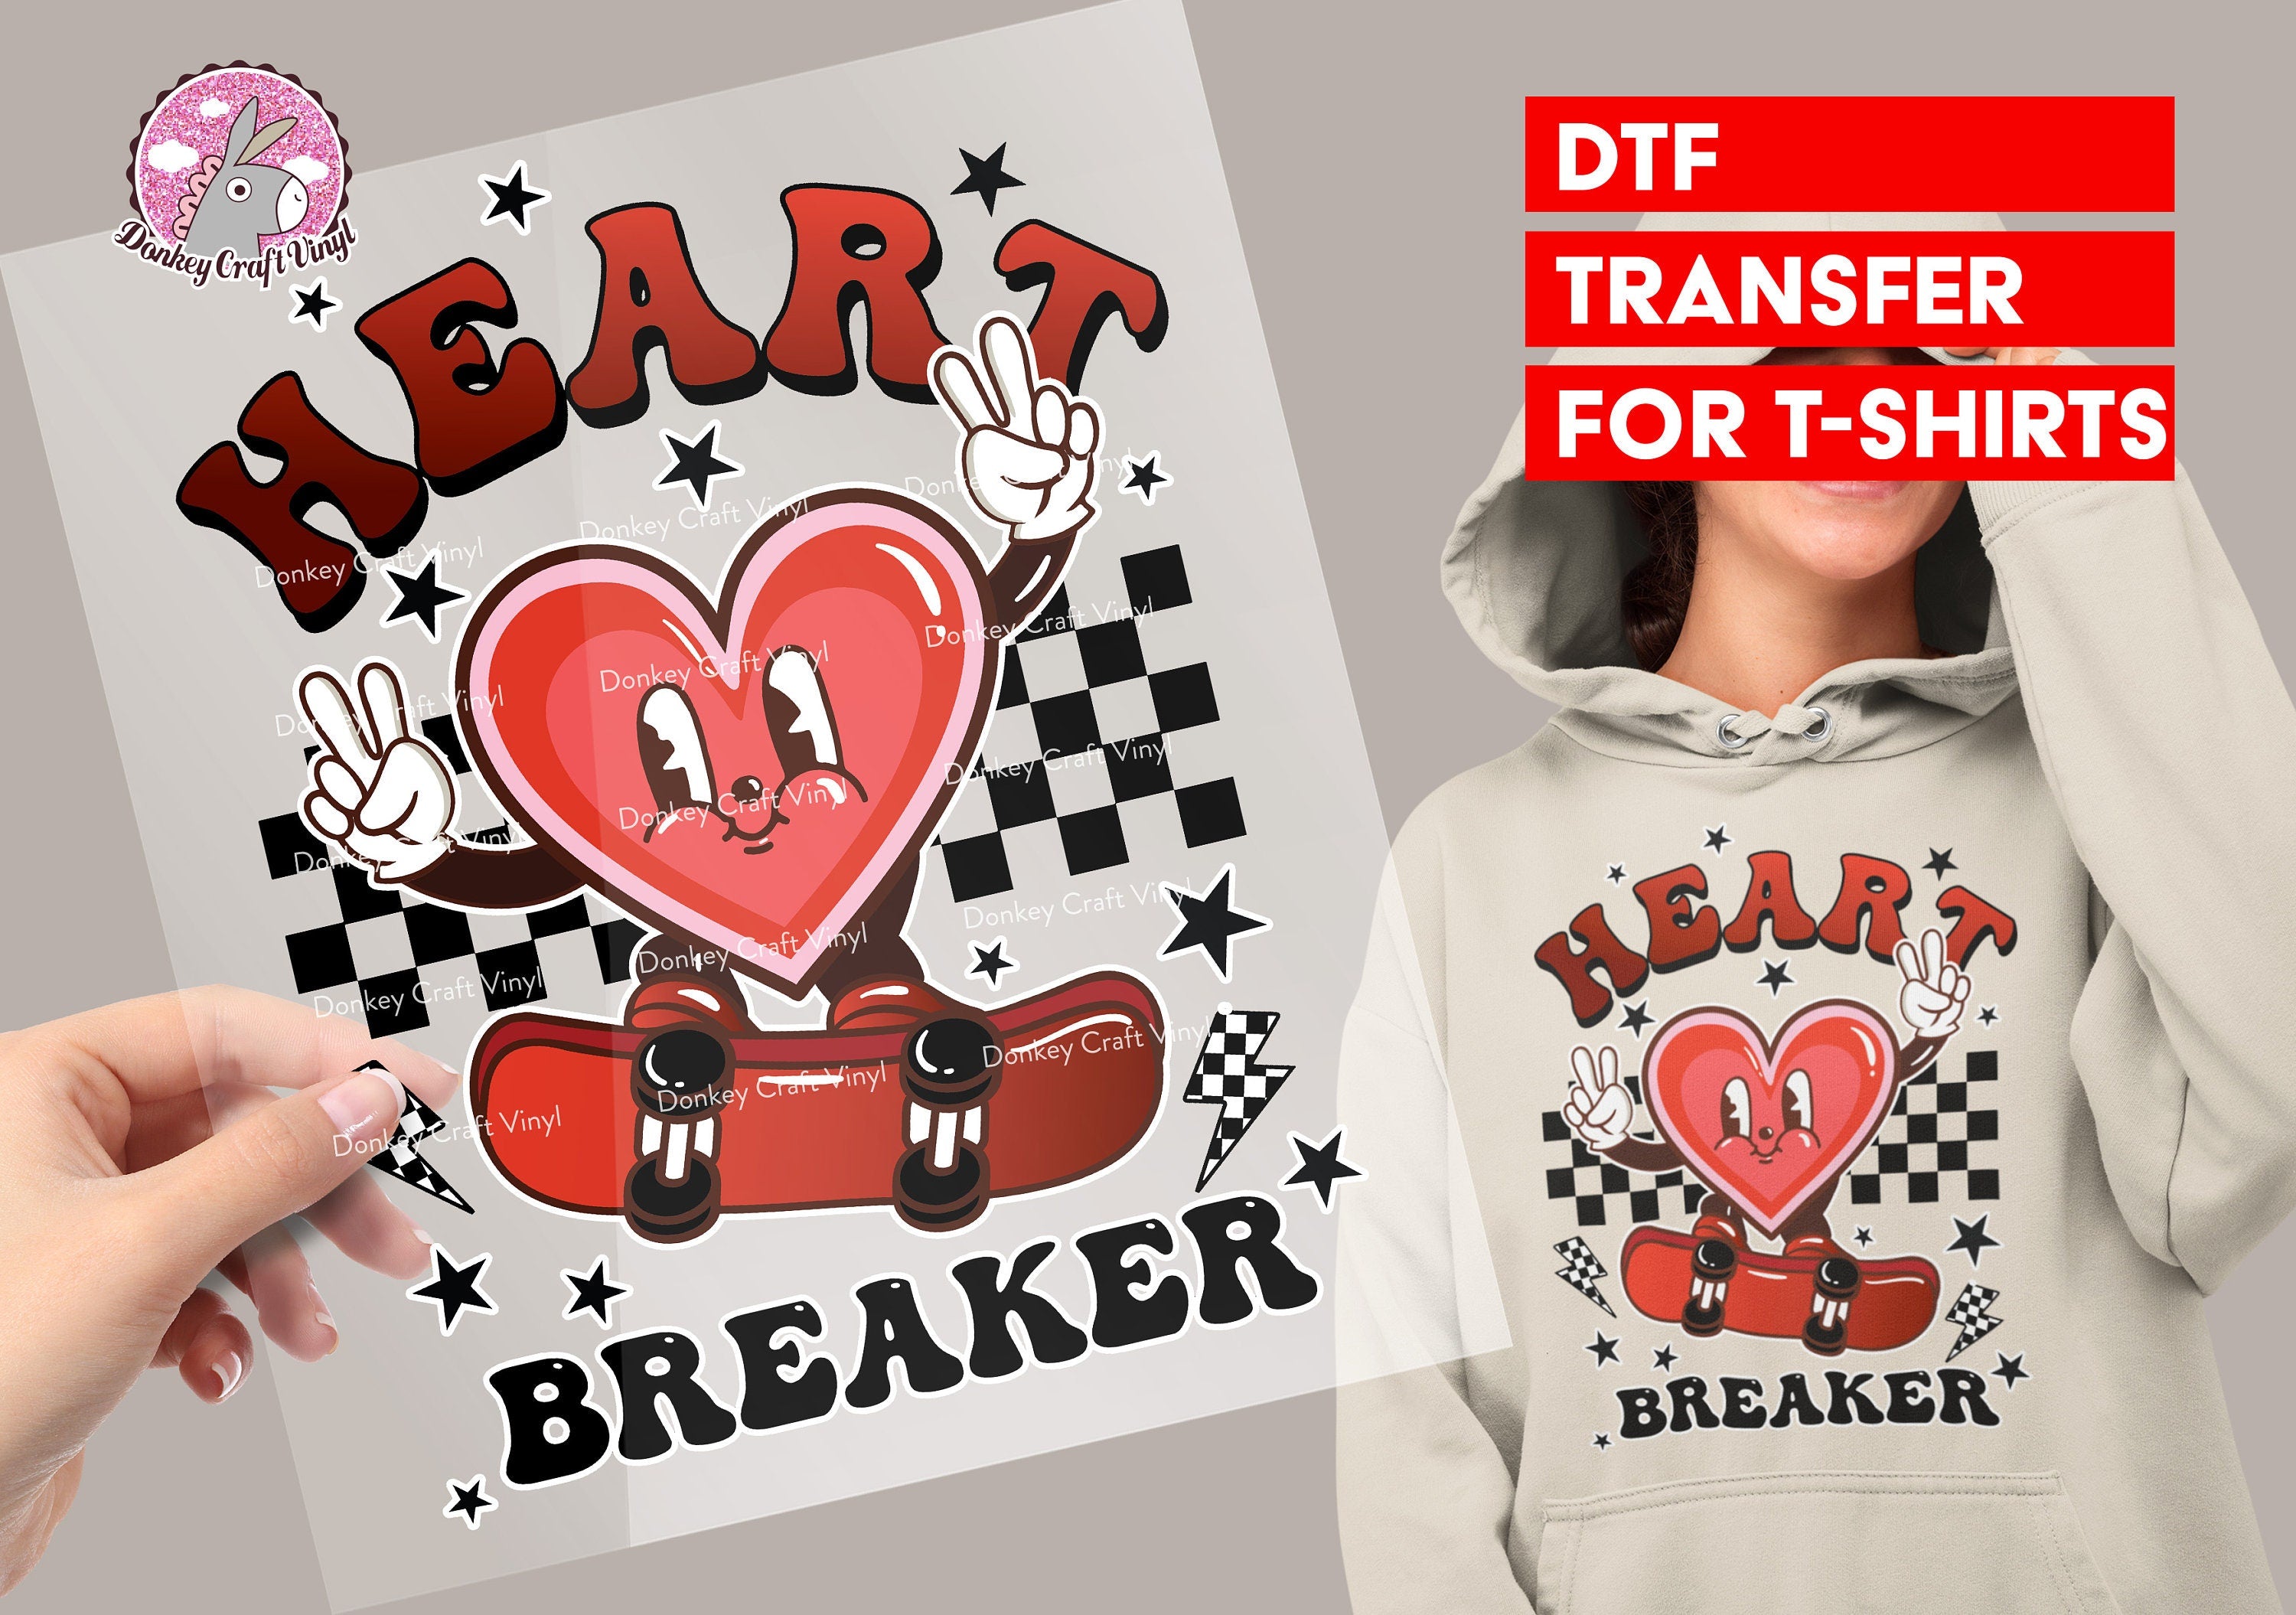 Heart Breaker DTF Transfer for T-shirts, Hoodies, Heat Transfer, Ready for Press Heat Press Transfers DTF76